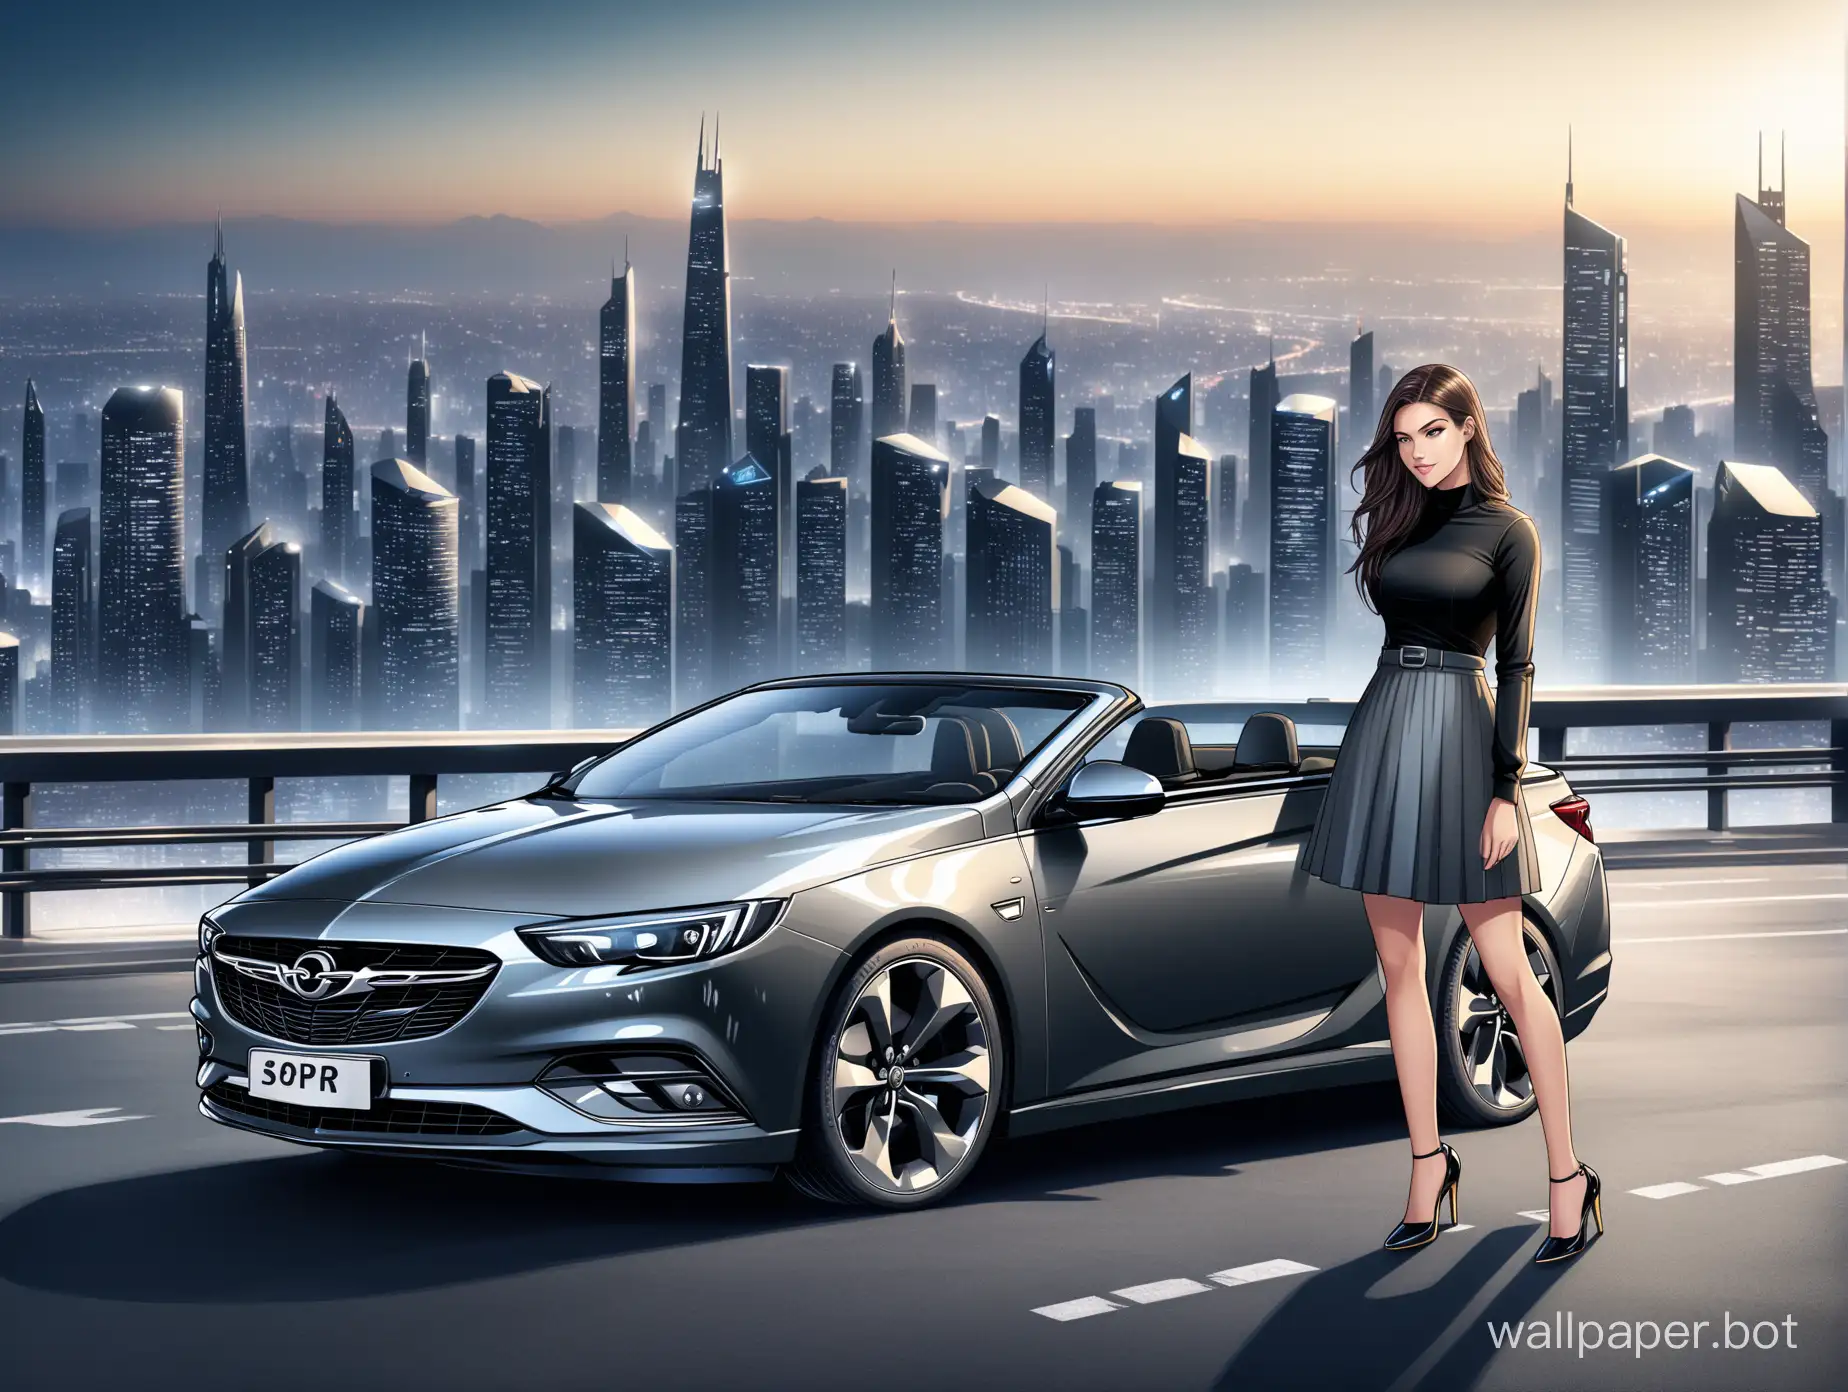 Brunette-Woman-with-Opel-Insignia-Grand-Sport-Convertible-in-Futuristic-City